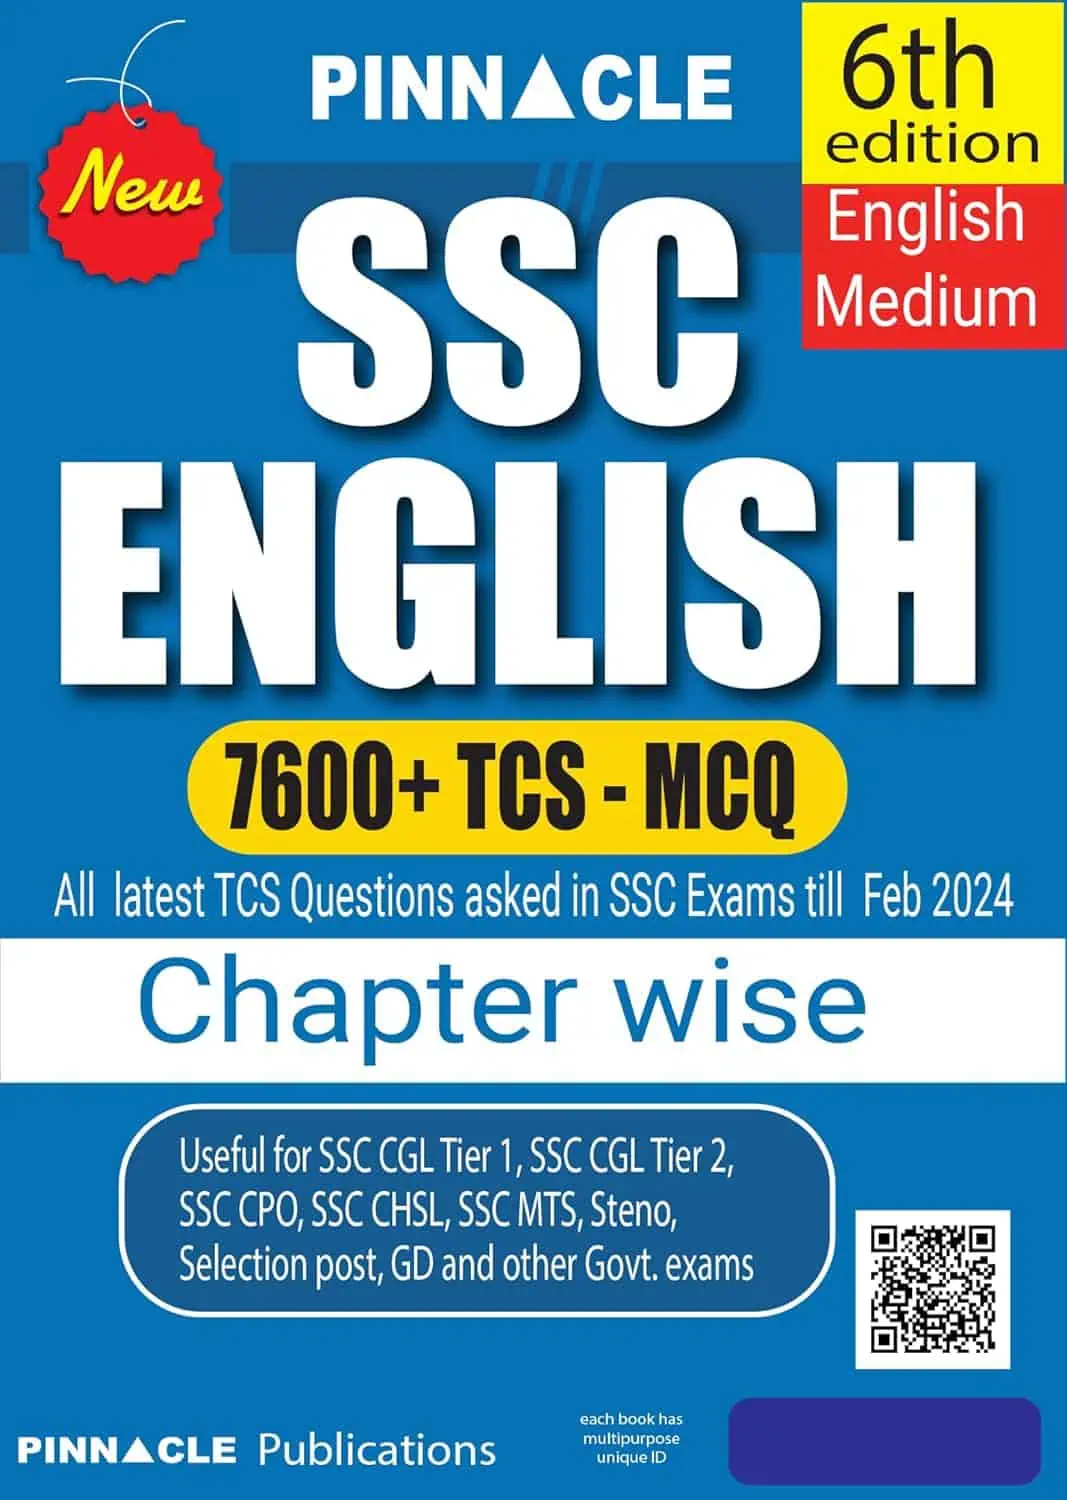 7600+ TCS MCQ SSC English [6th Edition] Book (English Medium) - Pinnacle